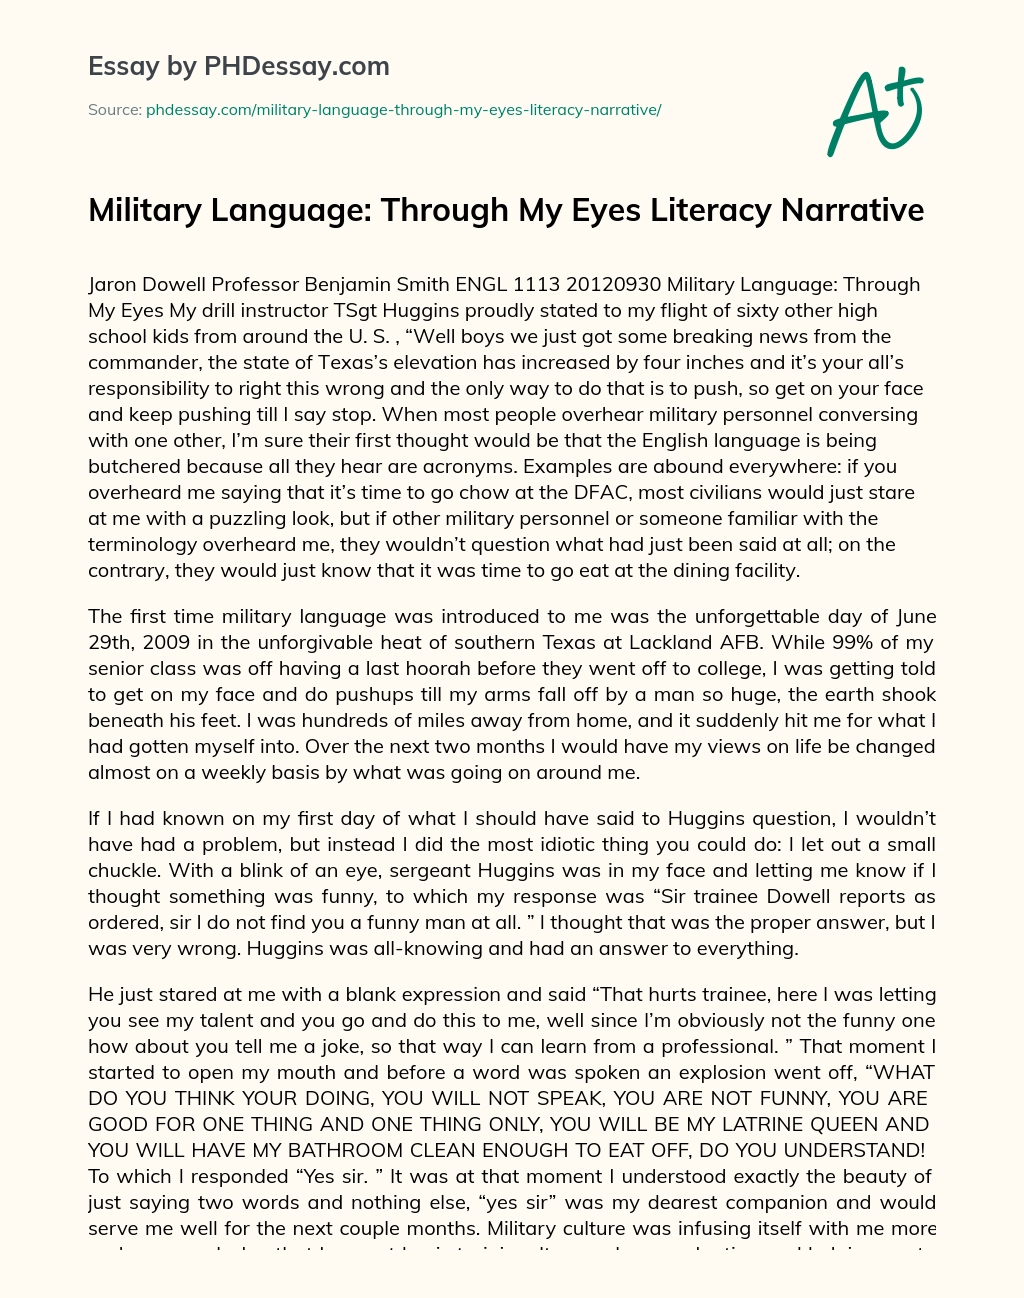 Military Language: Through My Eyes Literacy Narrative essay